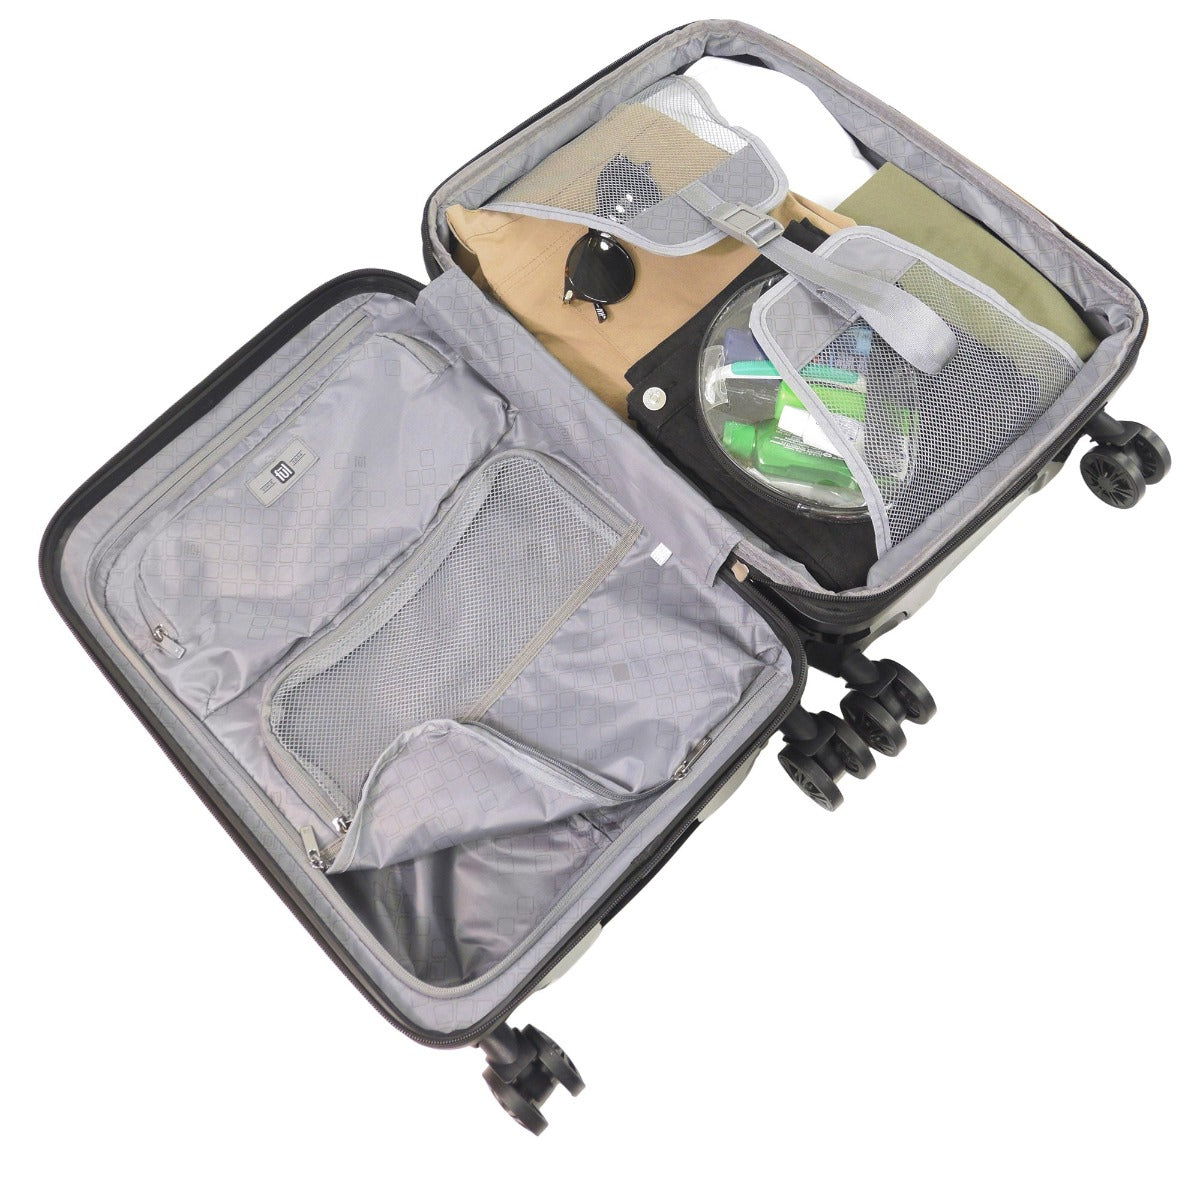 Ful Velocity 23" Hardside Spinner Suitcase Black Carry-on Luggage Interior